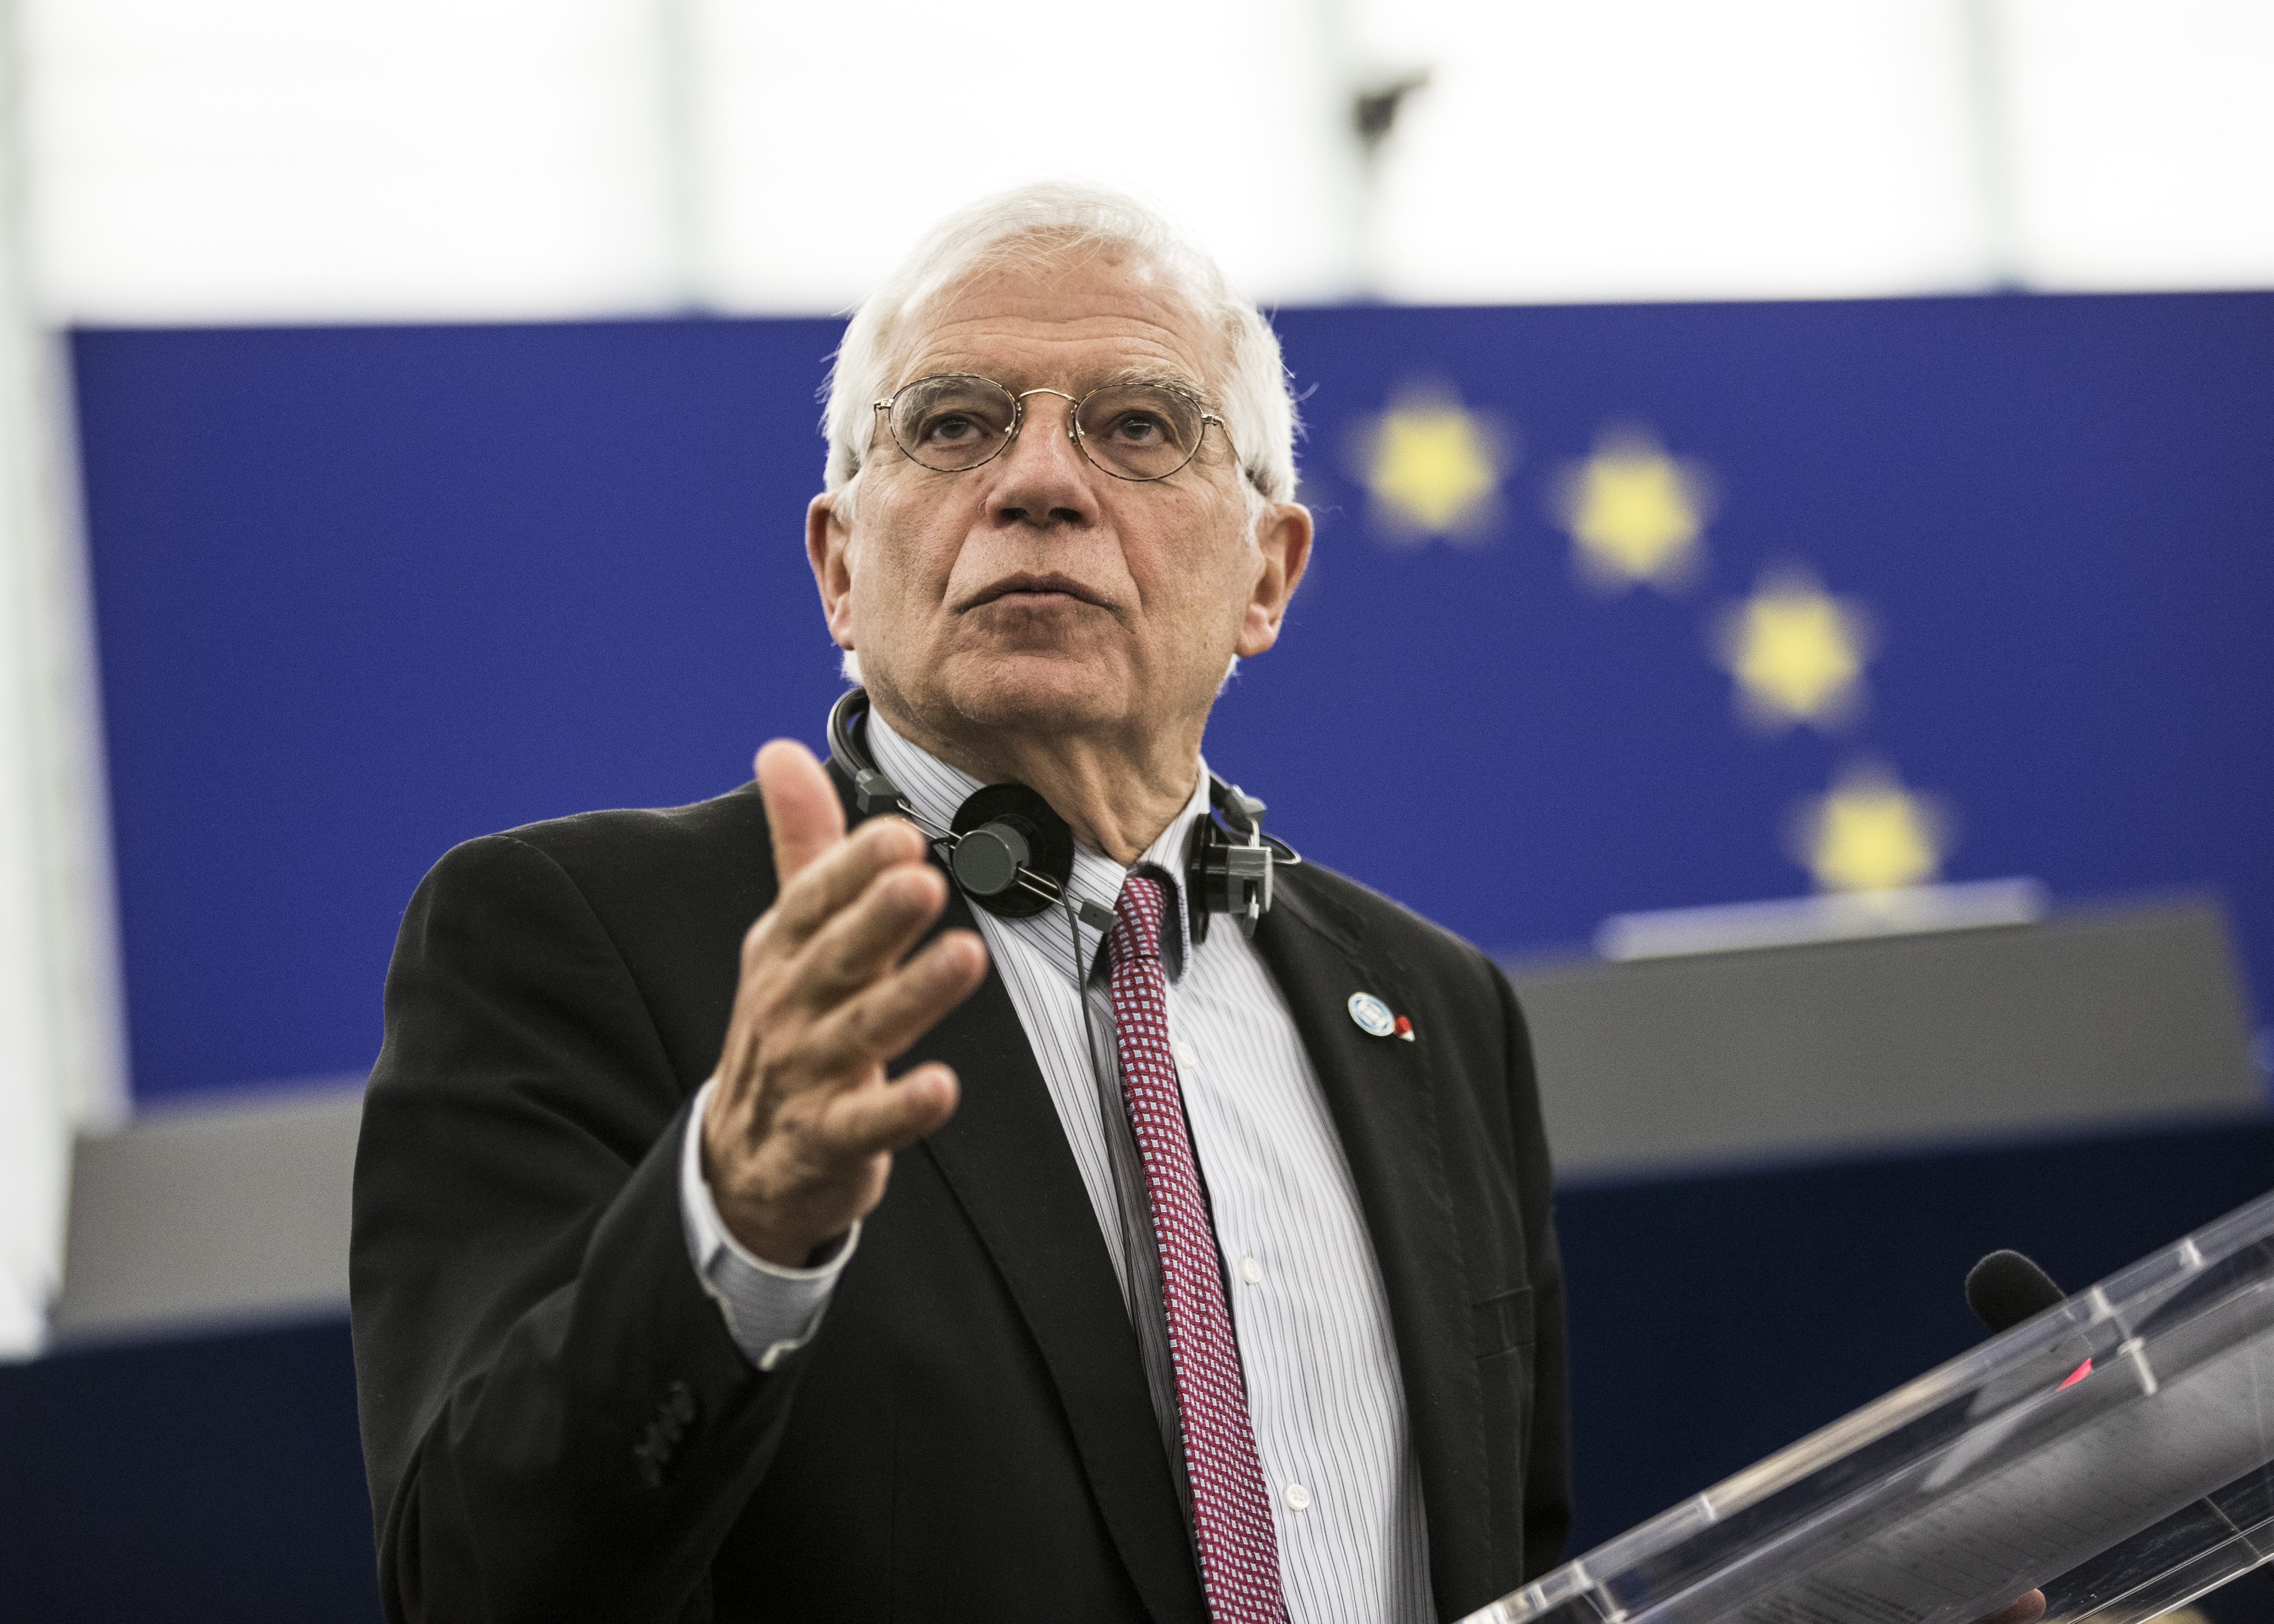 Selon Borrell, les déclarations agressives de l’ambassadeur de Chine en France sont inacceptables